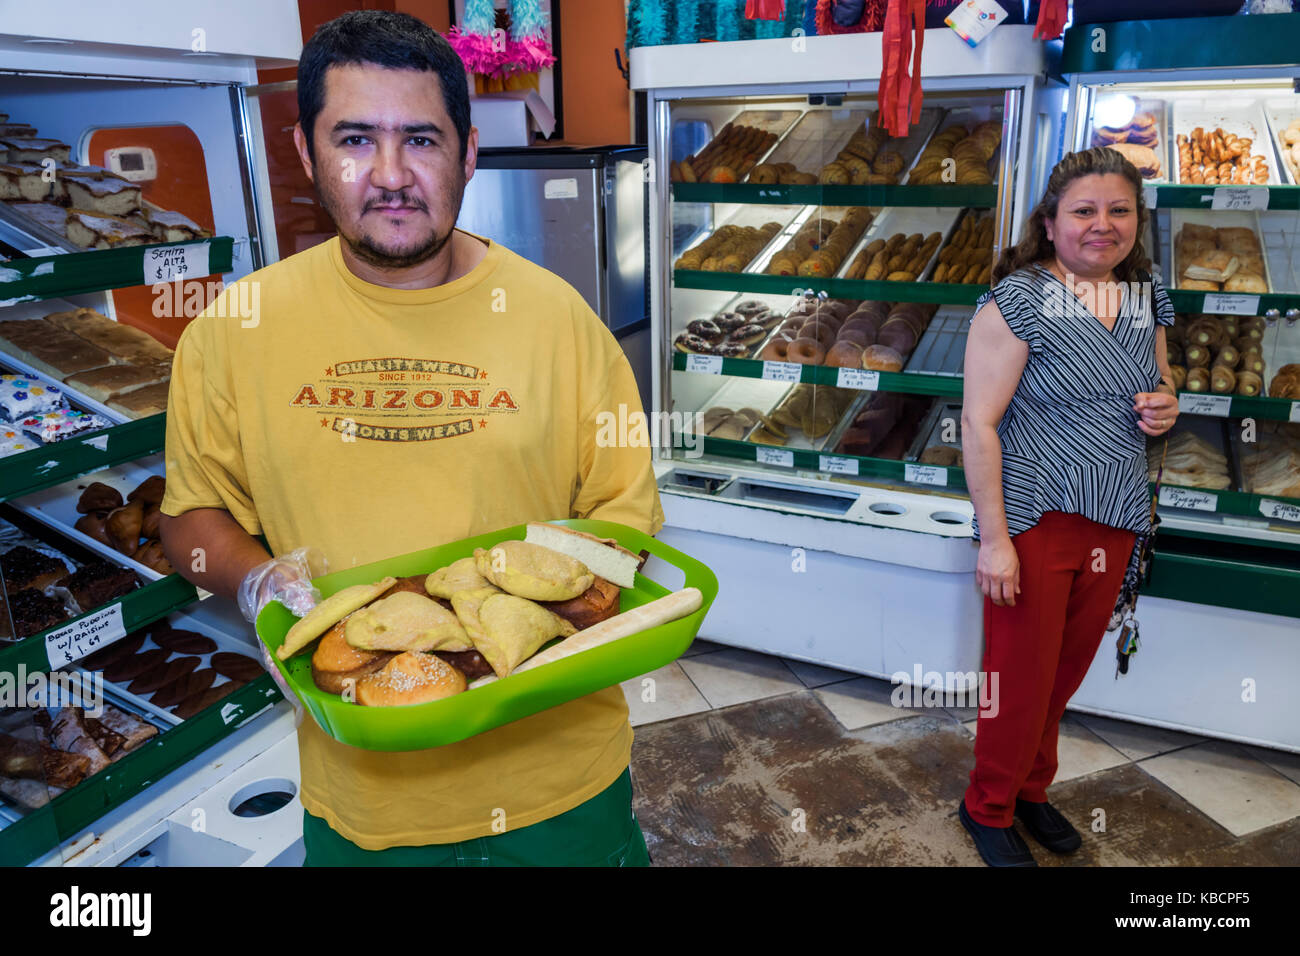 Richmond Virginia,Midlothian Turnpike,La Sabrosita Bakery,Mexican pastries,baked goods,sweets,Hispanic man men male,woman female women,customers,VA170 Stock Photo